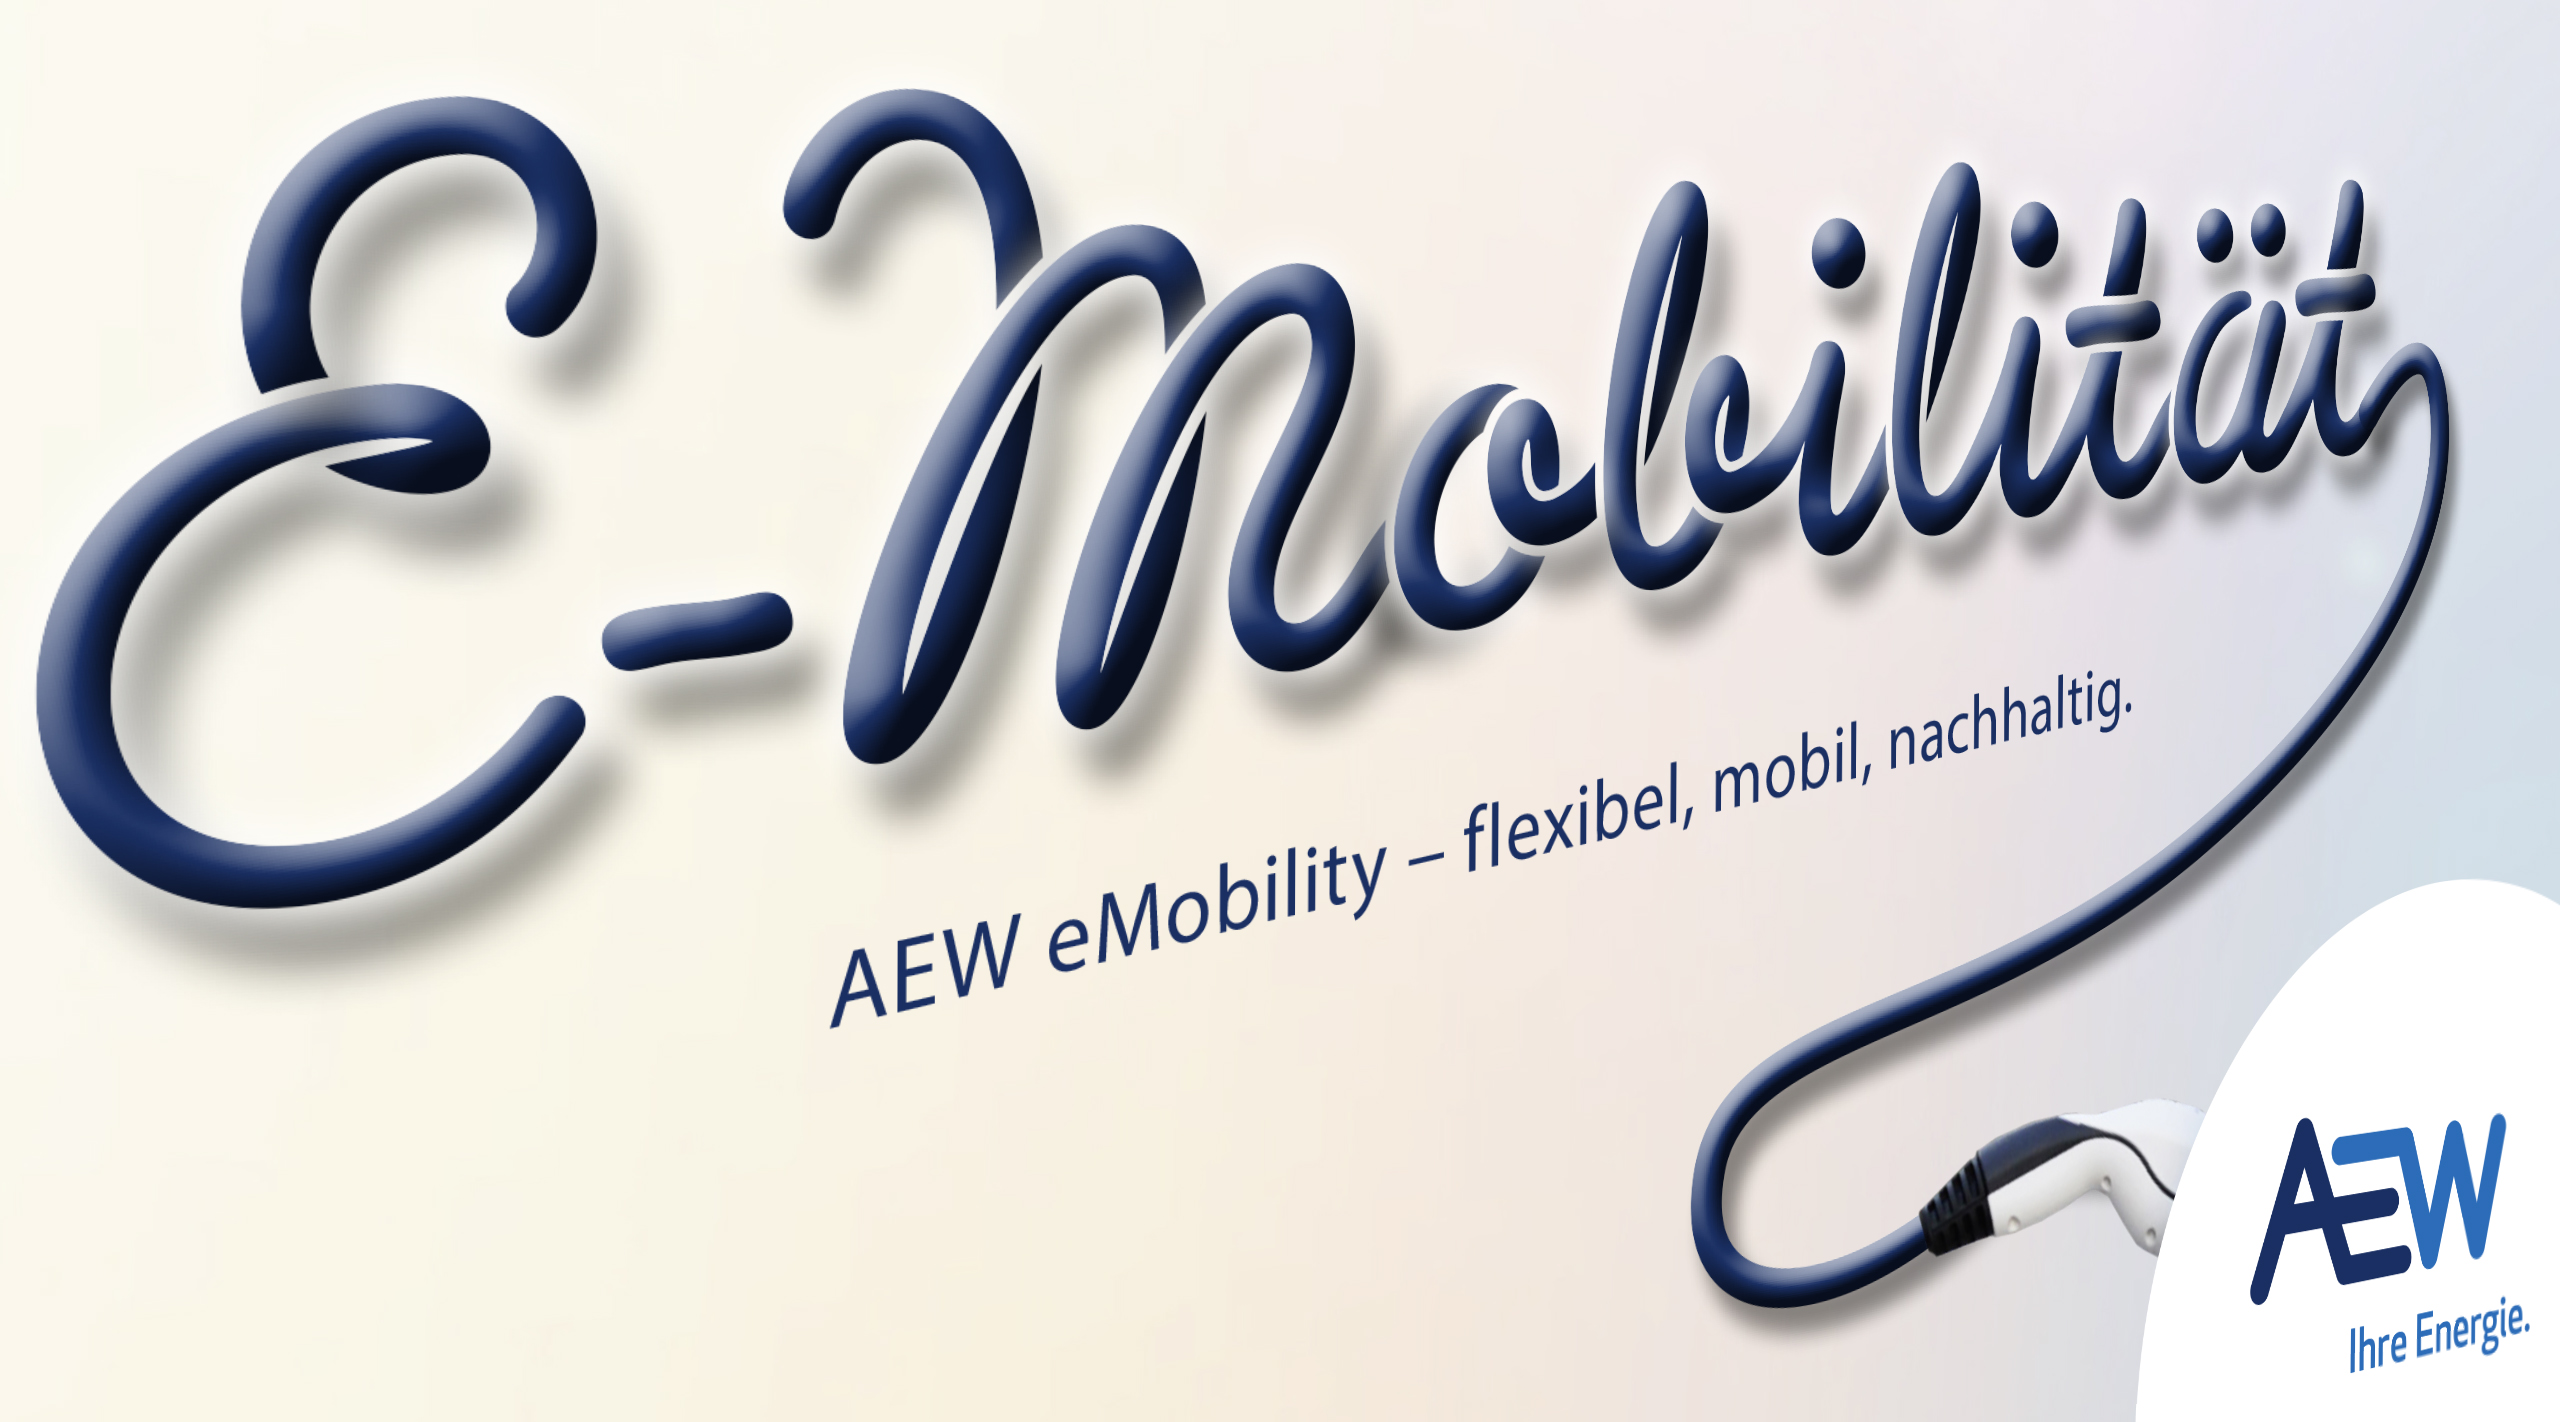 AEW Energie AG > eMobility